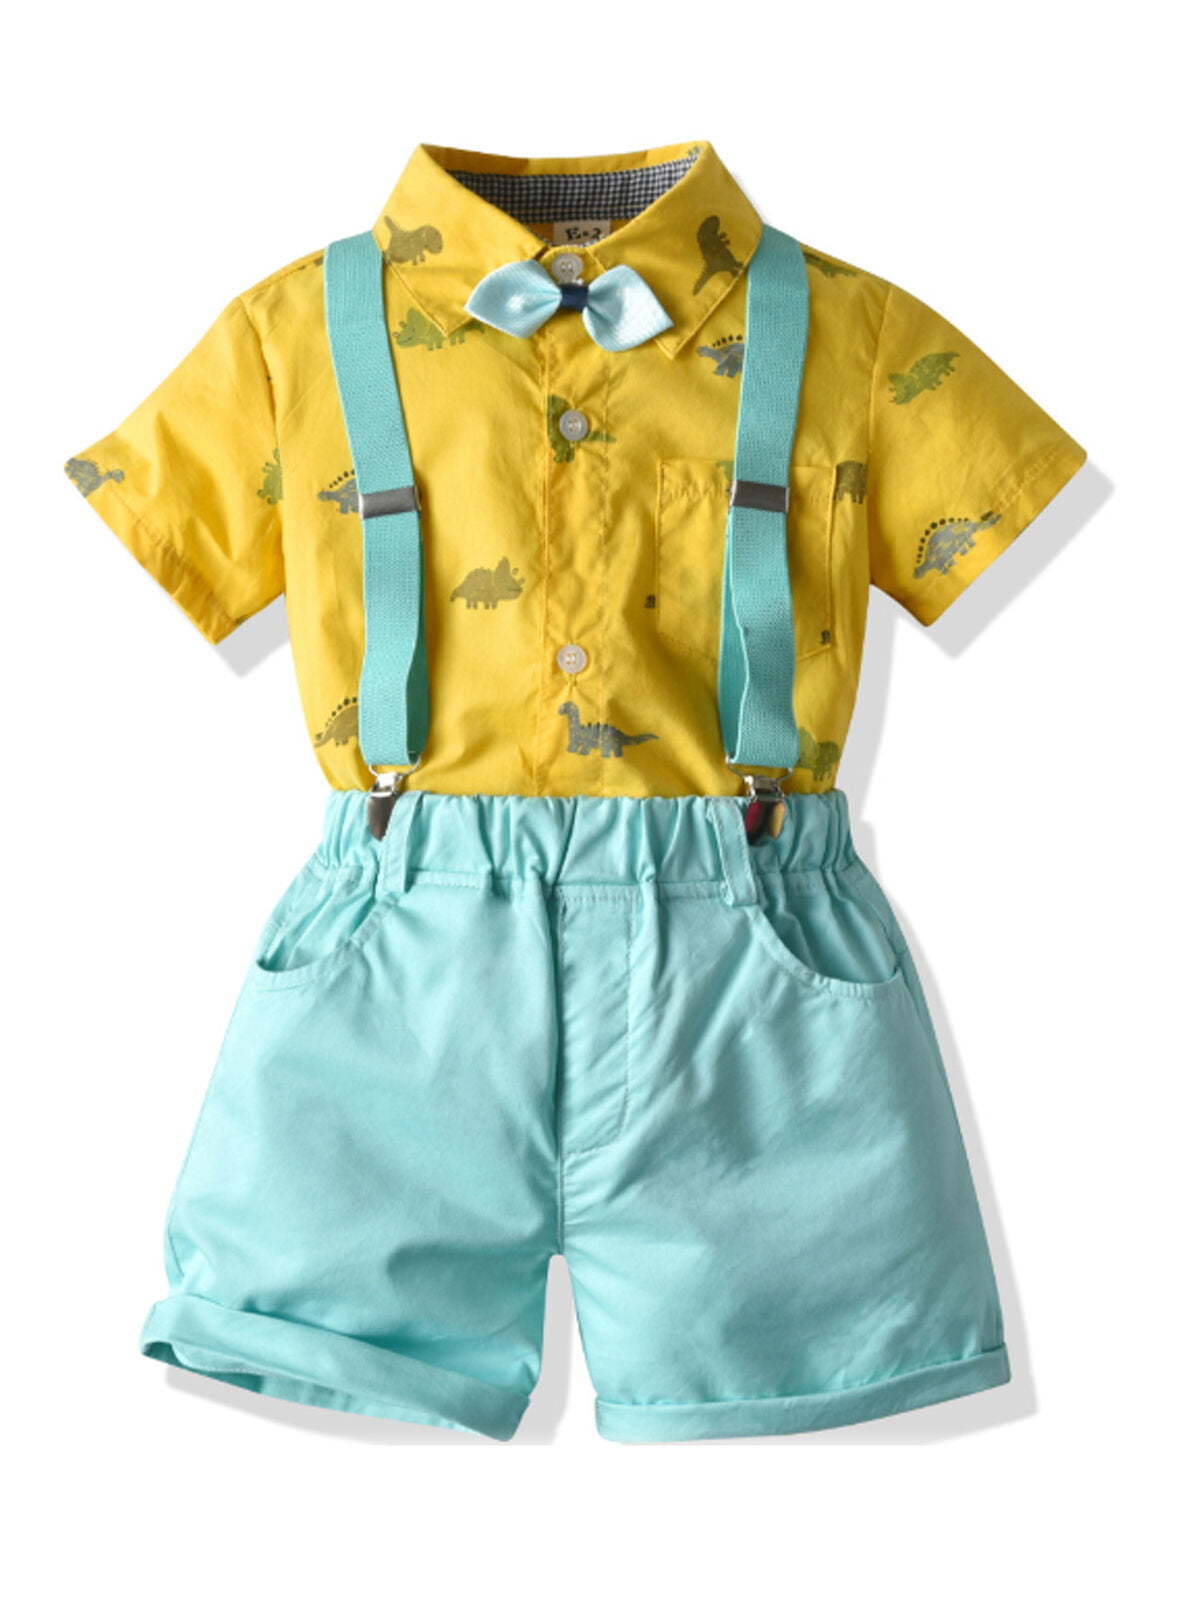 US Child Kids Baby Boy Outfits Short Sleeve T-shirt+Shorts Gentleman Clothes Set 